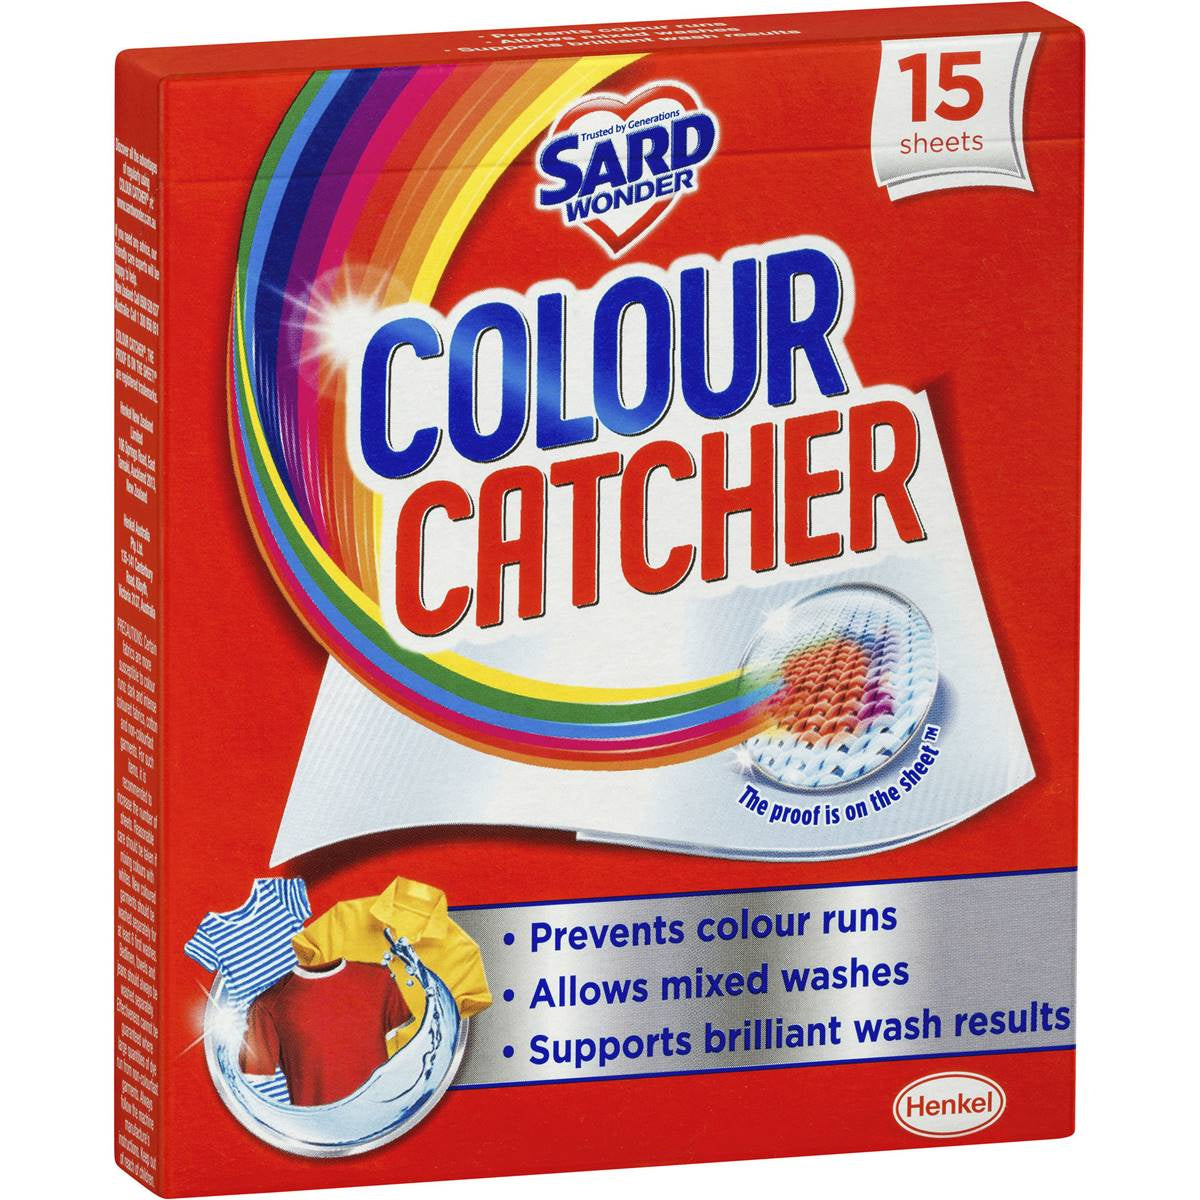 Sard Colour Catcher